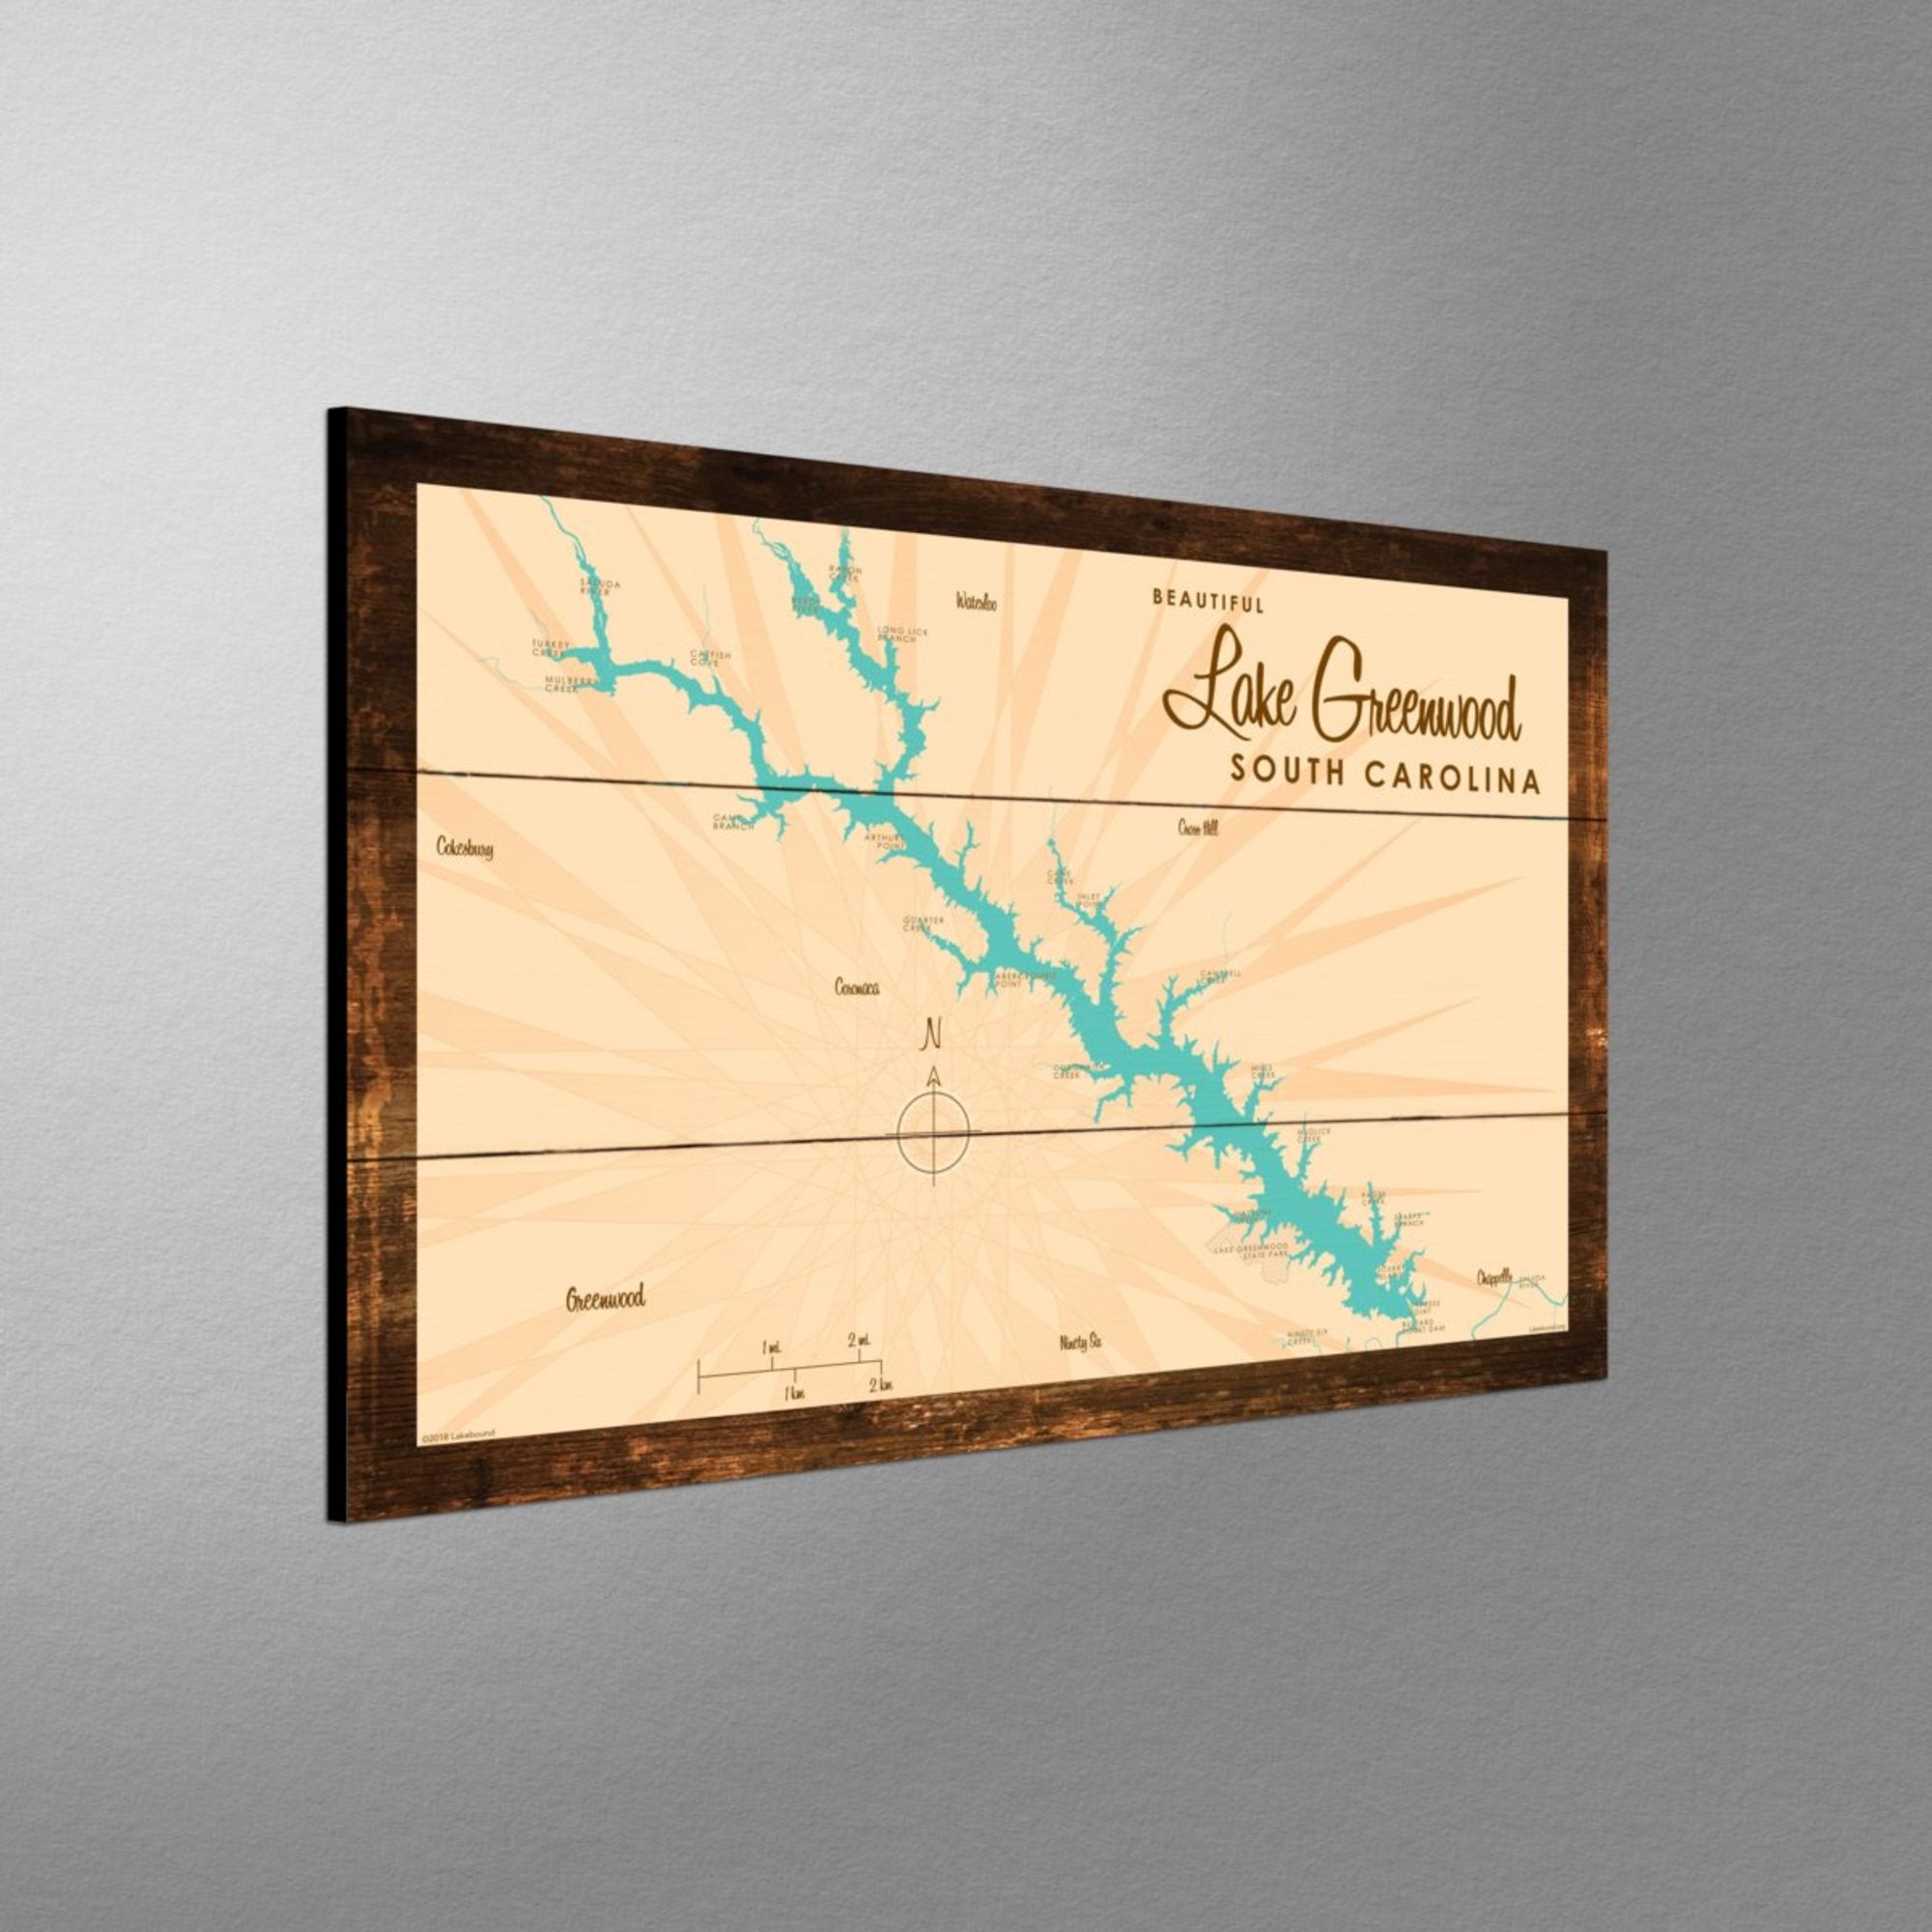 Lake Greenwood South Carolina, Rustic Wood Sign Map Art